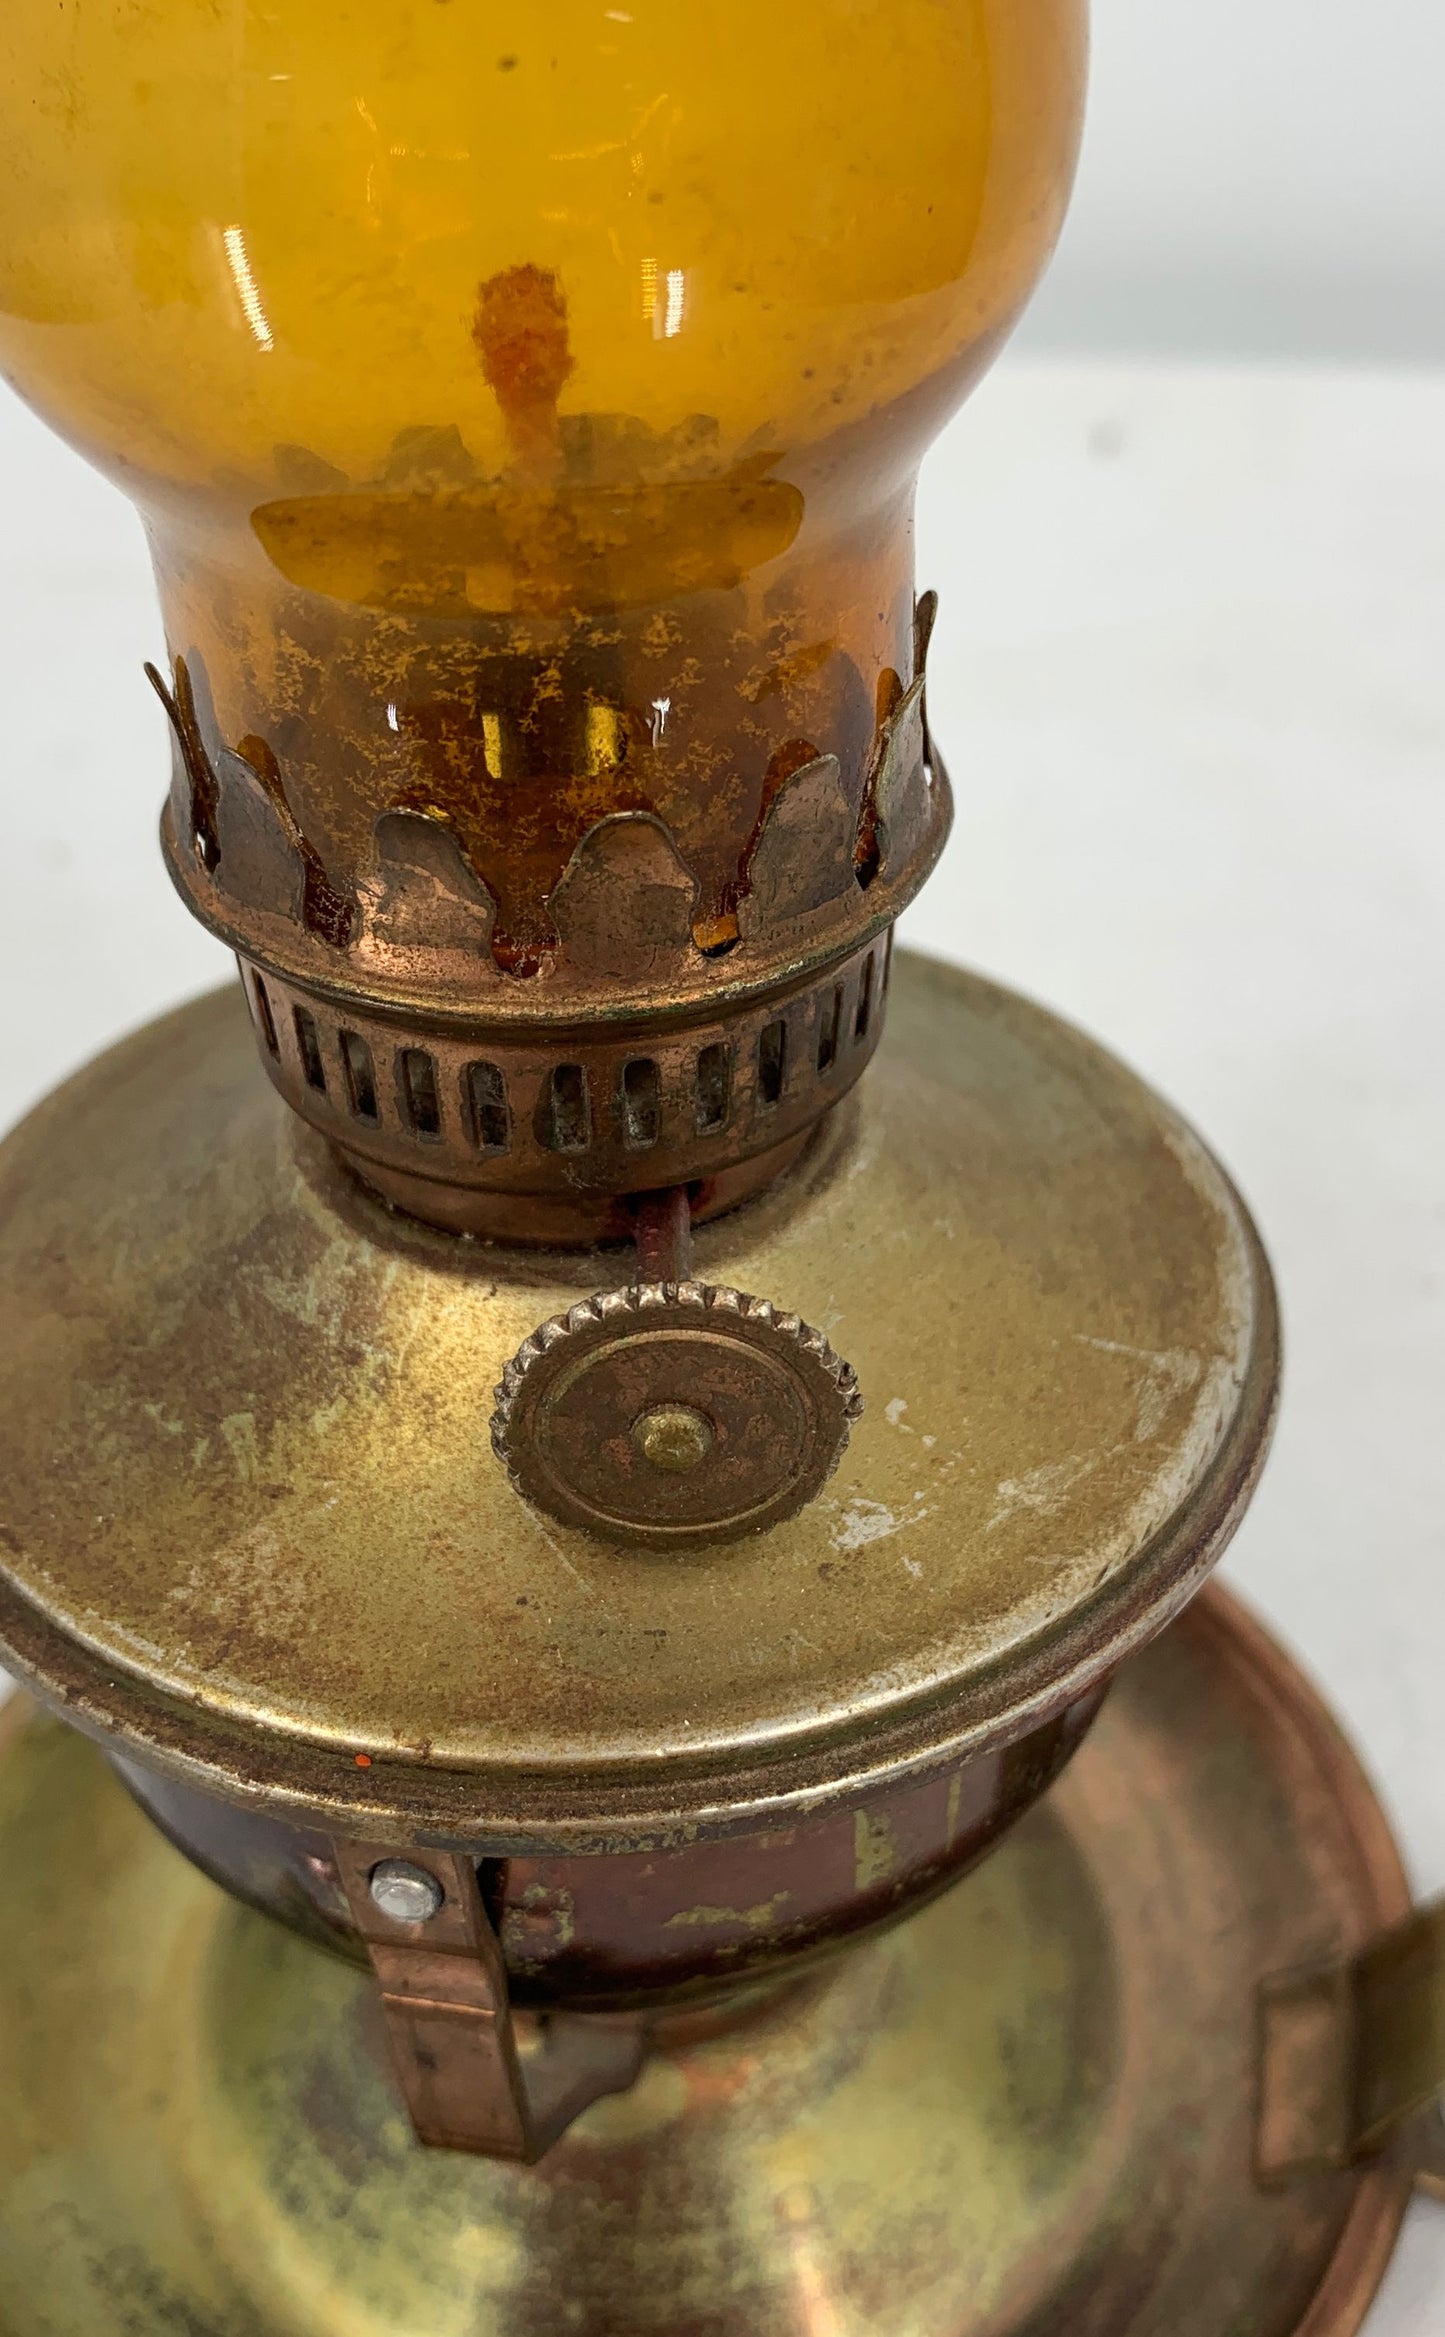 Unbranded Vintage Amber Miniature Brass Oil Swivel Base Lamp No 5260